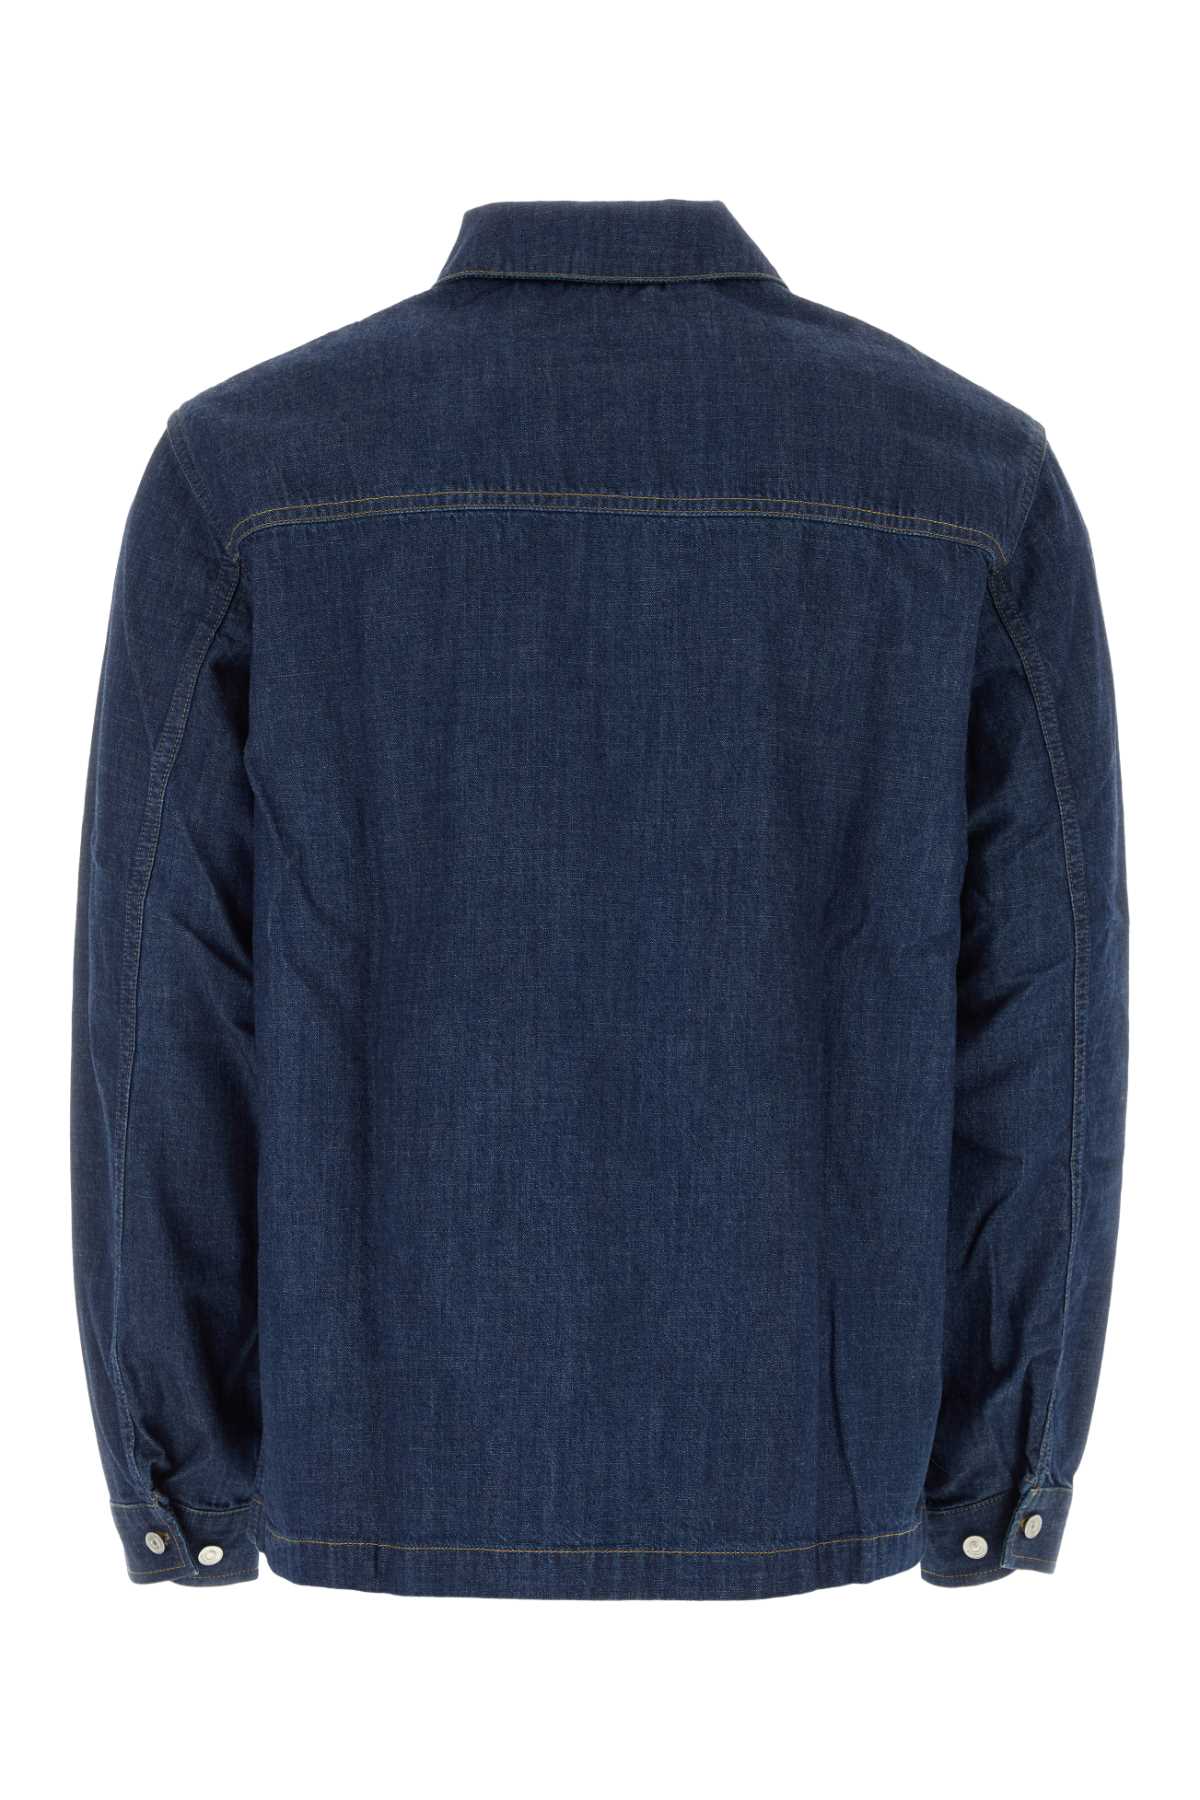 Givenchy Dark Blue Denim Shirt In Indigoblue